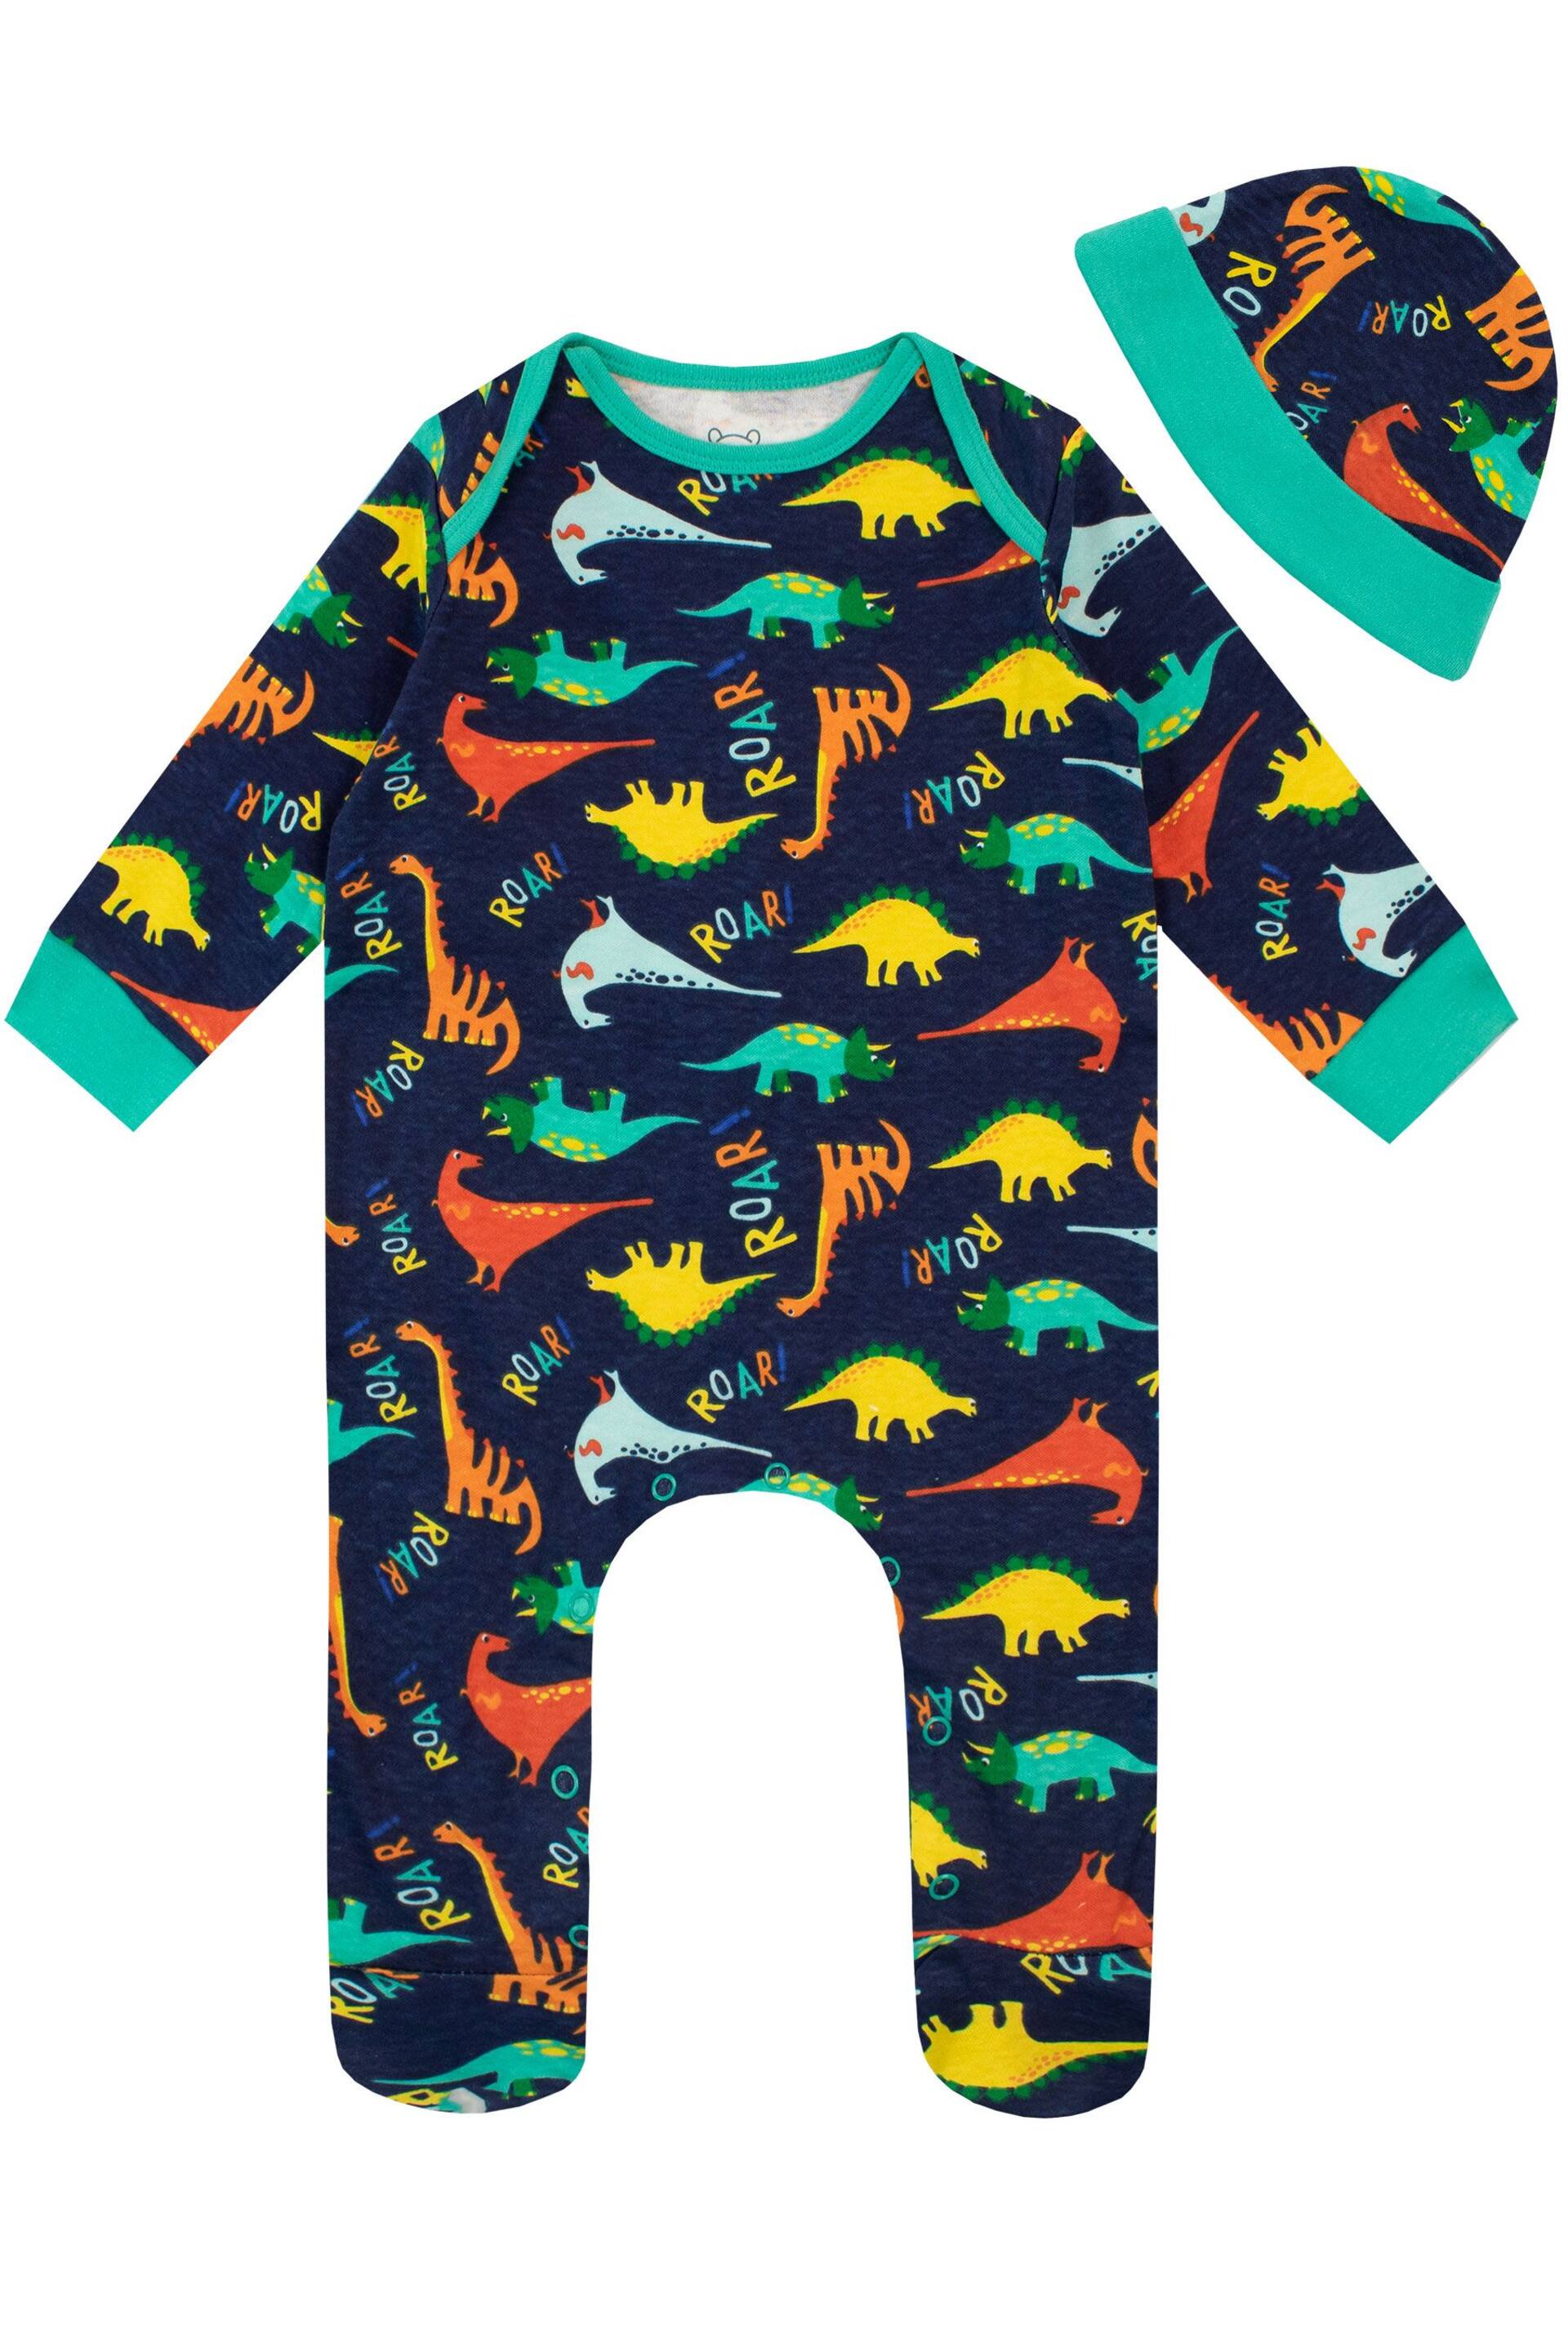 Harry Bear Blue Dinosaur Sleepsuit & Hat Set - Image 1 of 4